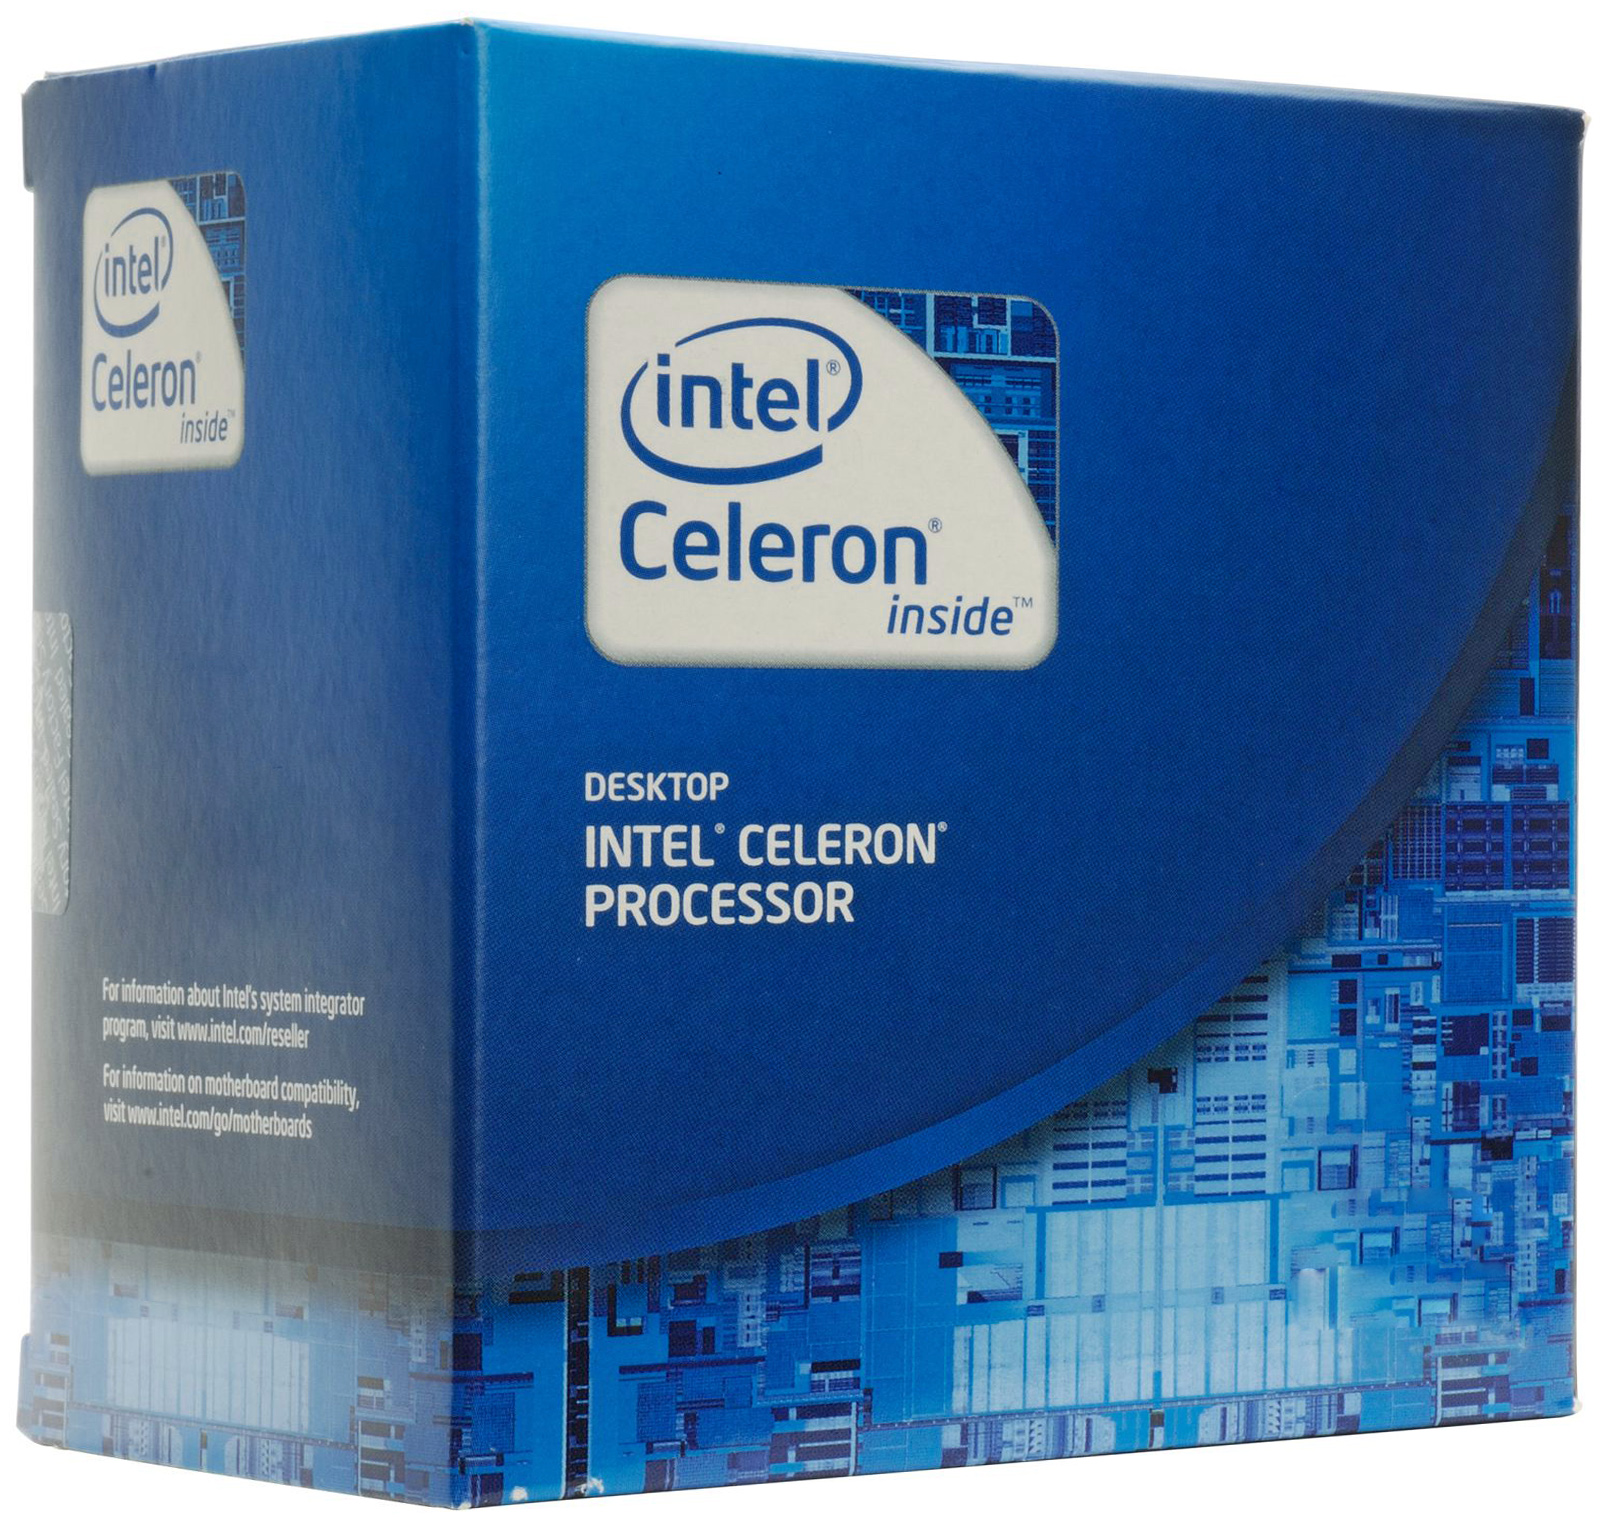 Интел селерон характеристики. Процессор Intel® Pentium® g2020. Intel Pentium g2020. Intel Pentium g2020 Box. Процессор Интел селерон g530.